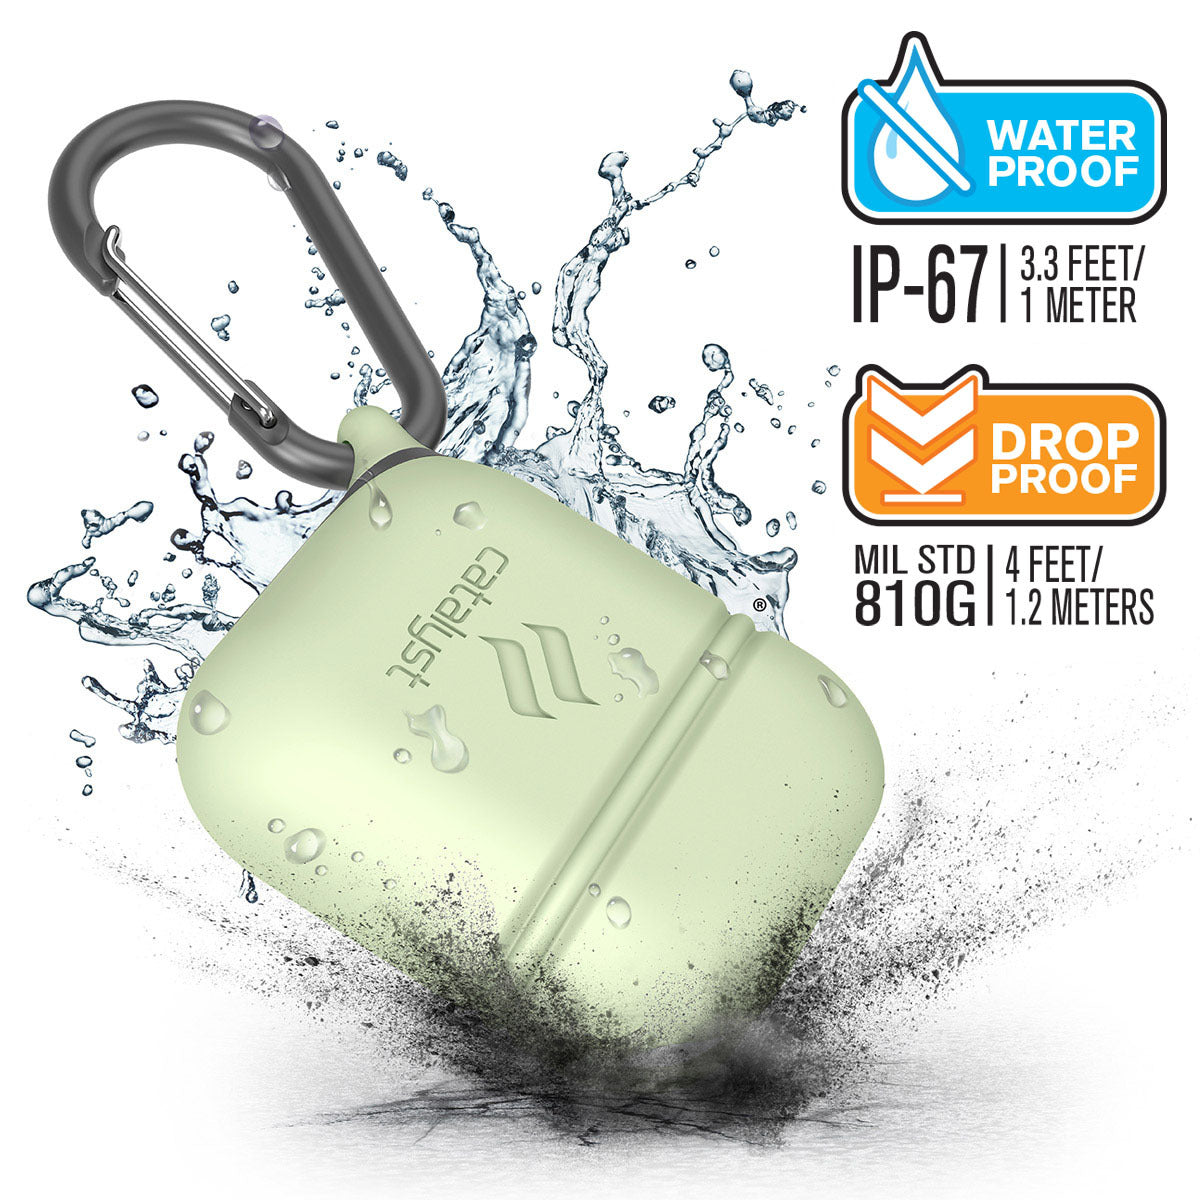 Catalyst Waterproof Case for Airpods Gen 1 & 2 special edition + carabiner drop with water splash text reads waterproof IP-67 3.3 feet/1meter drop proof MIL STD 810g 4 feet/ 1.2 meters